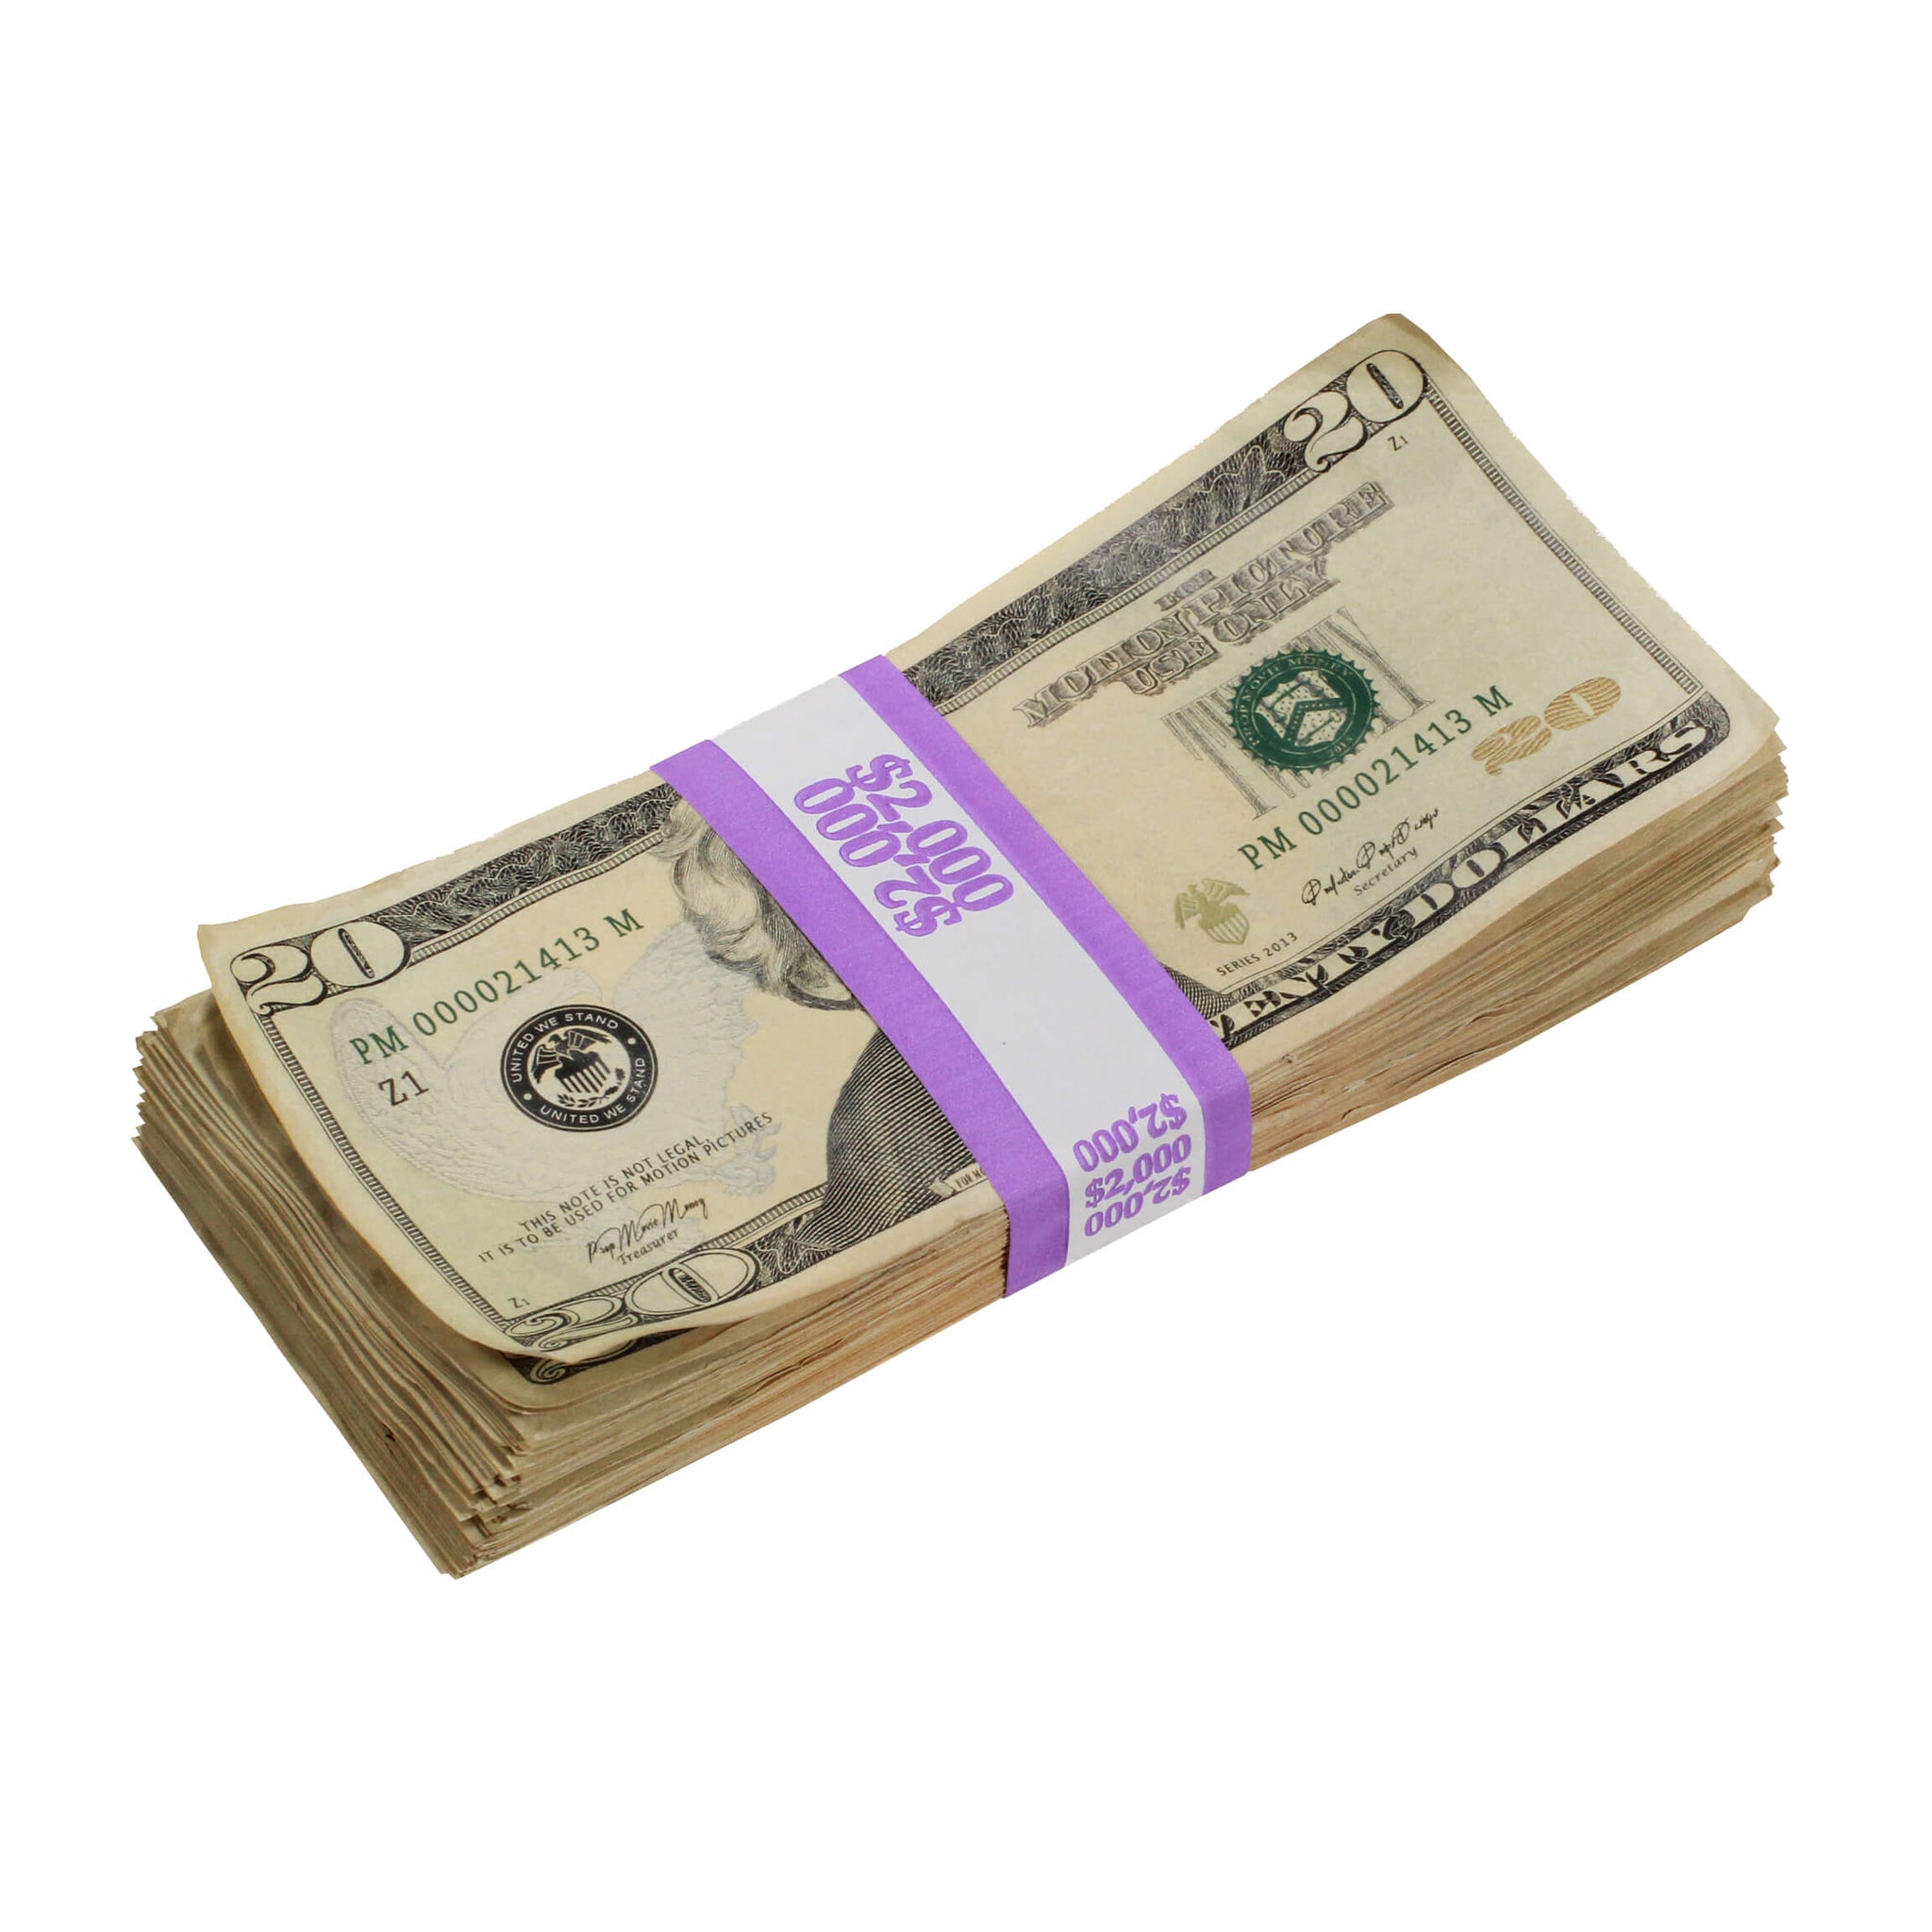 twenty dollar bill stack